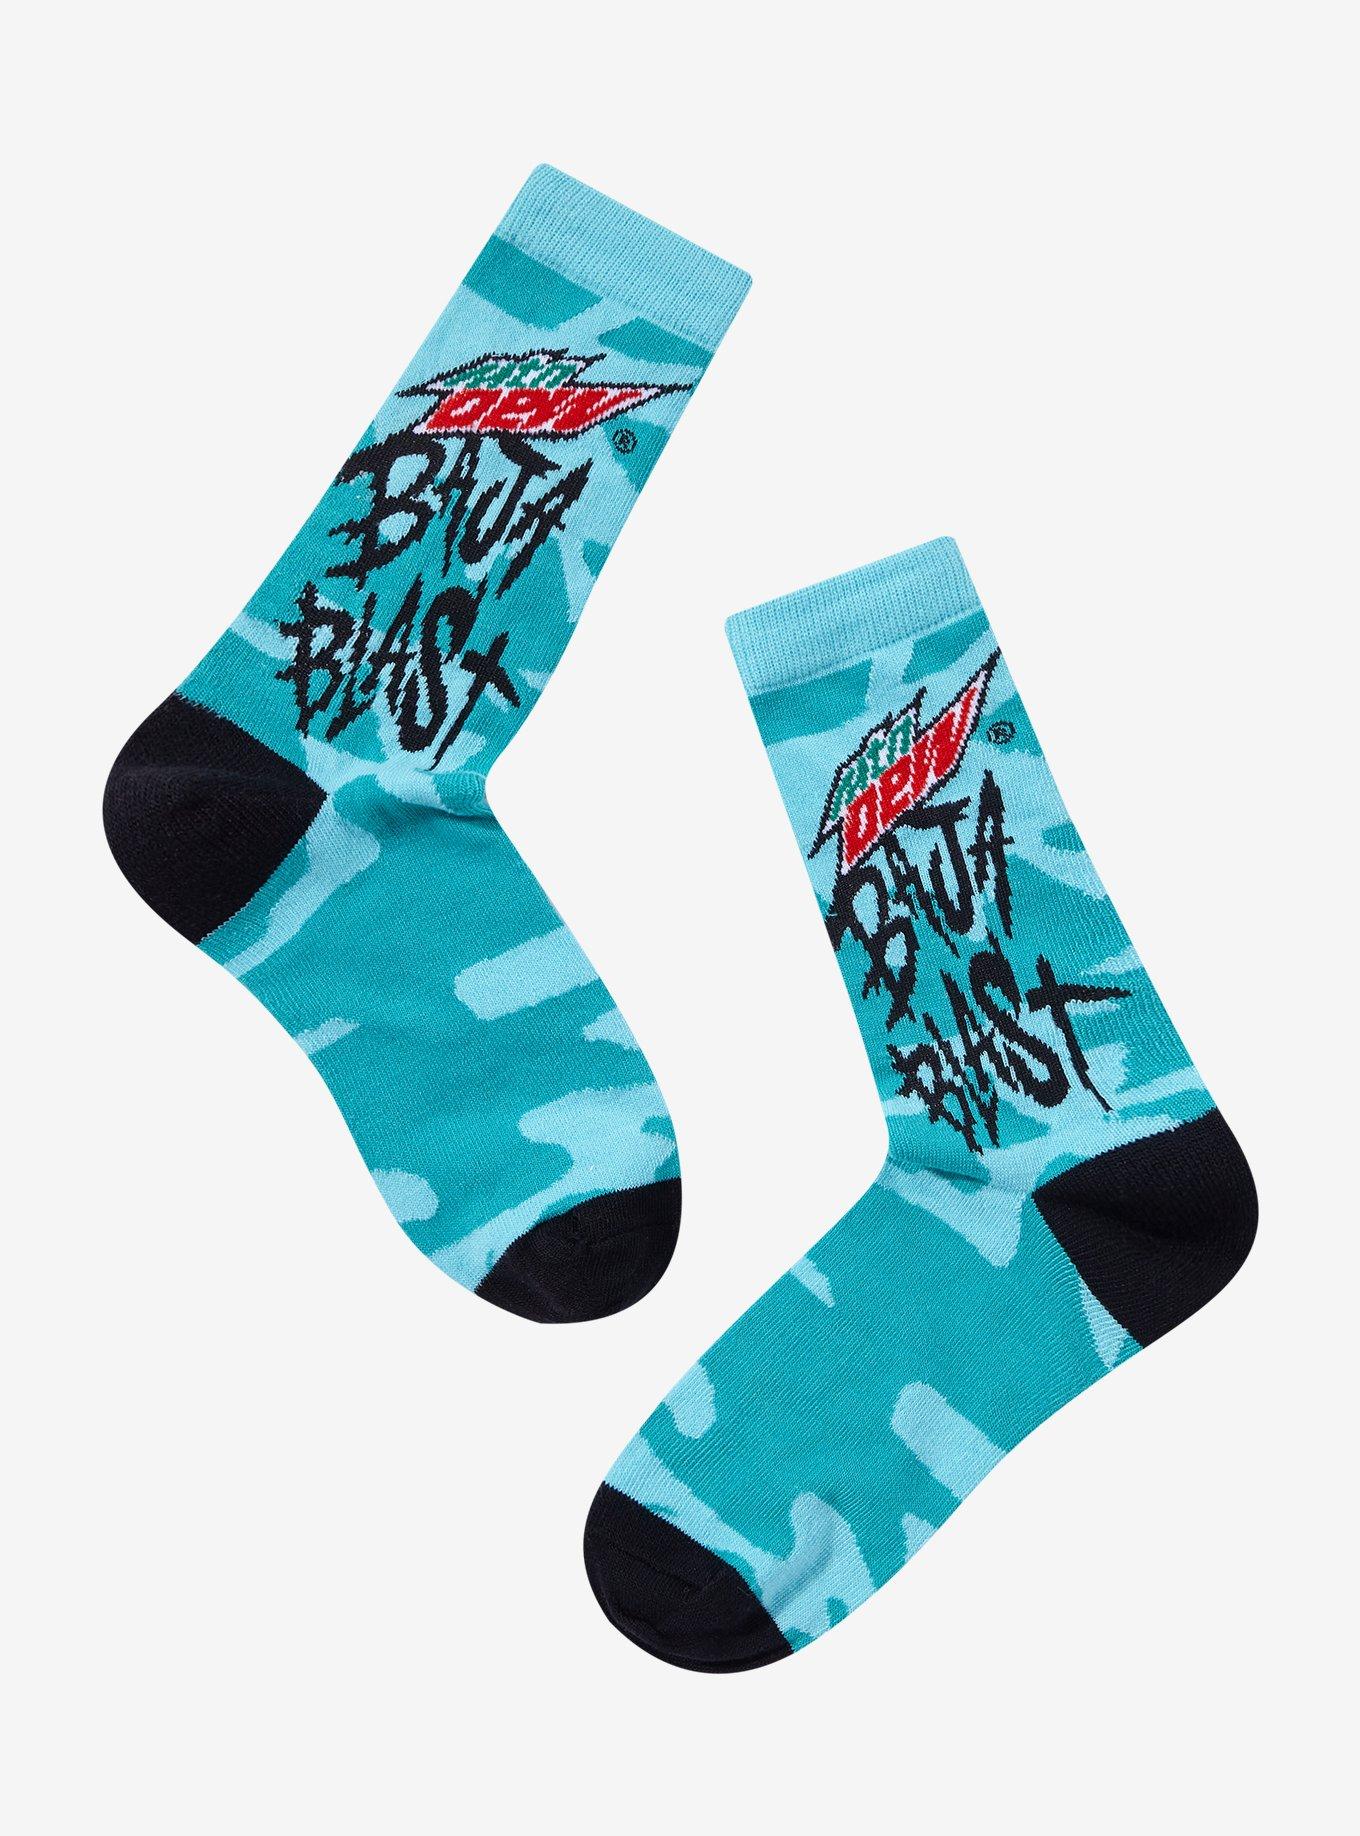 Mountain Dew Baja Blast Swirl Crew Socks